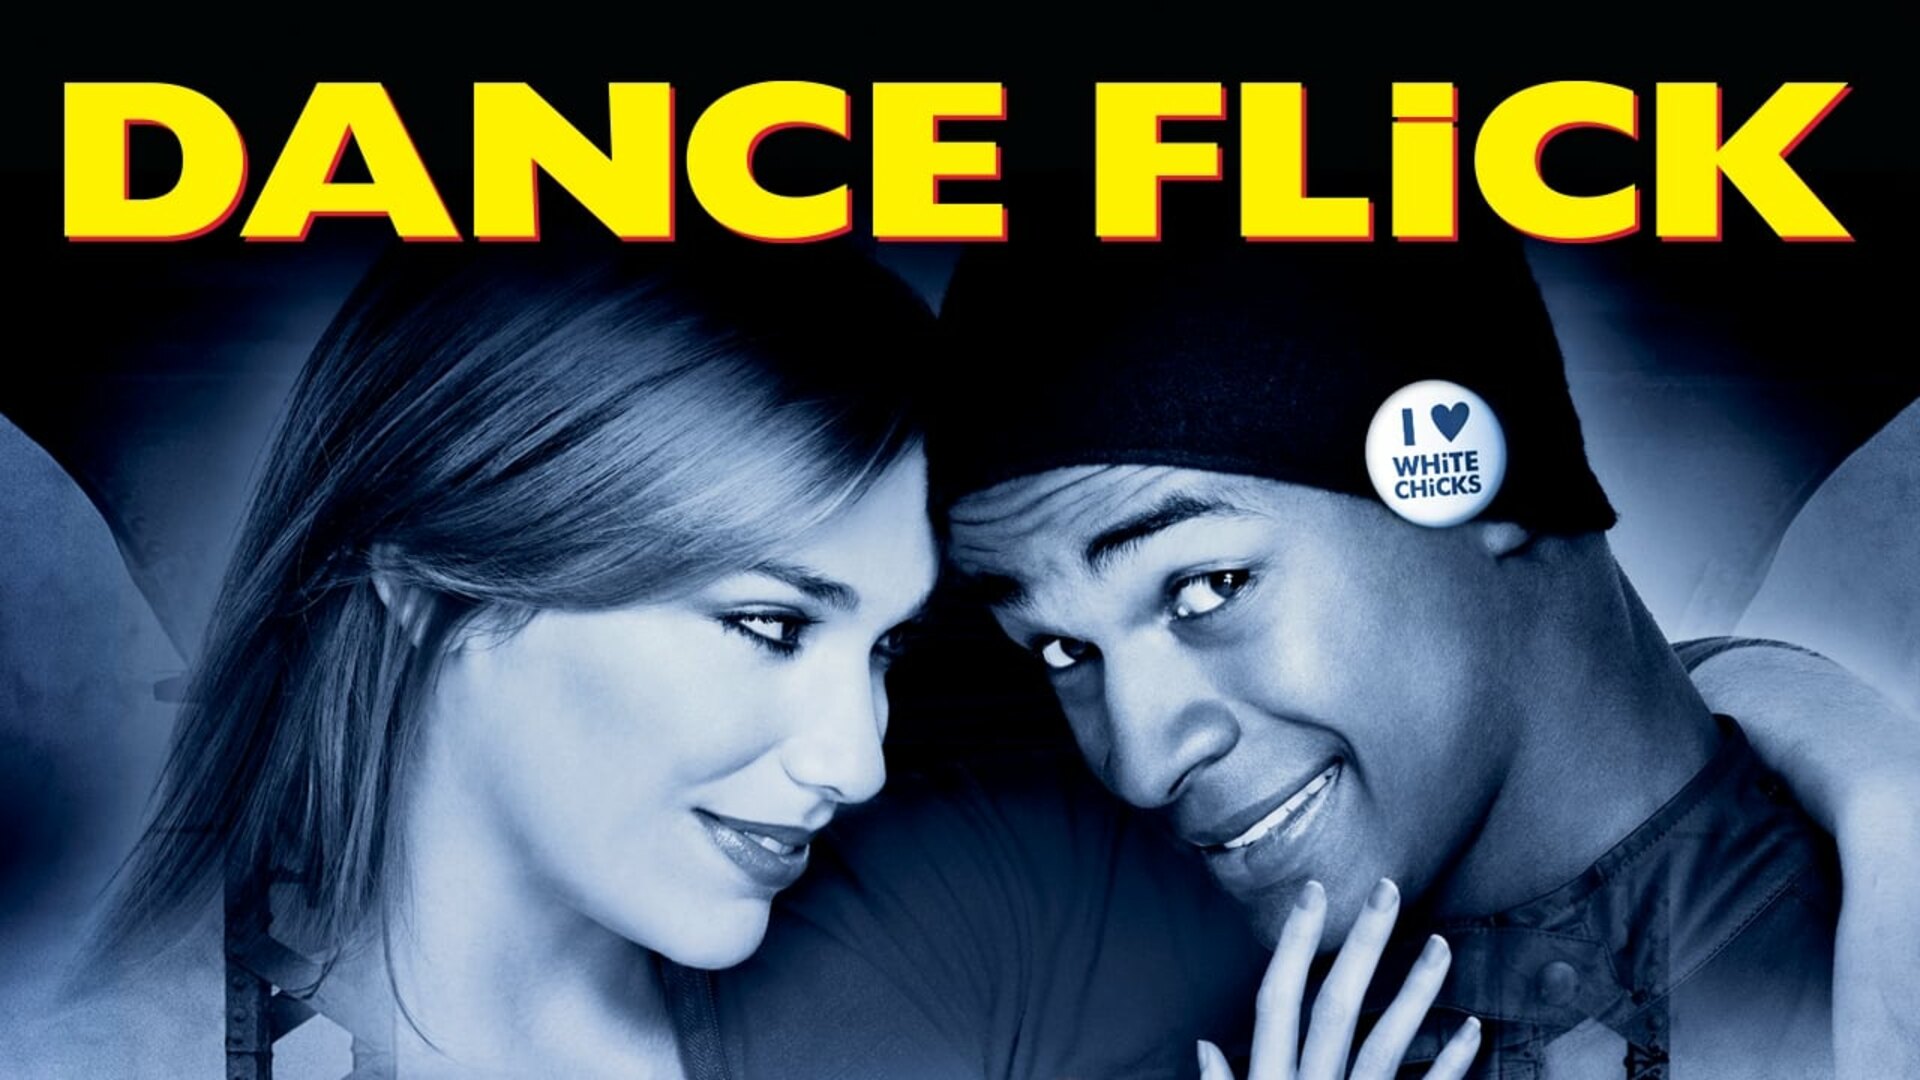 dance flick full movie online